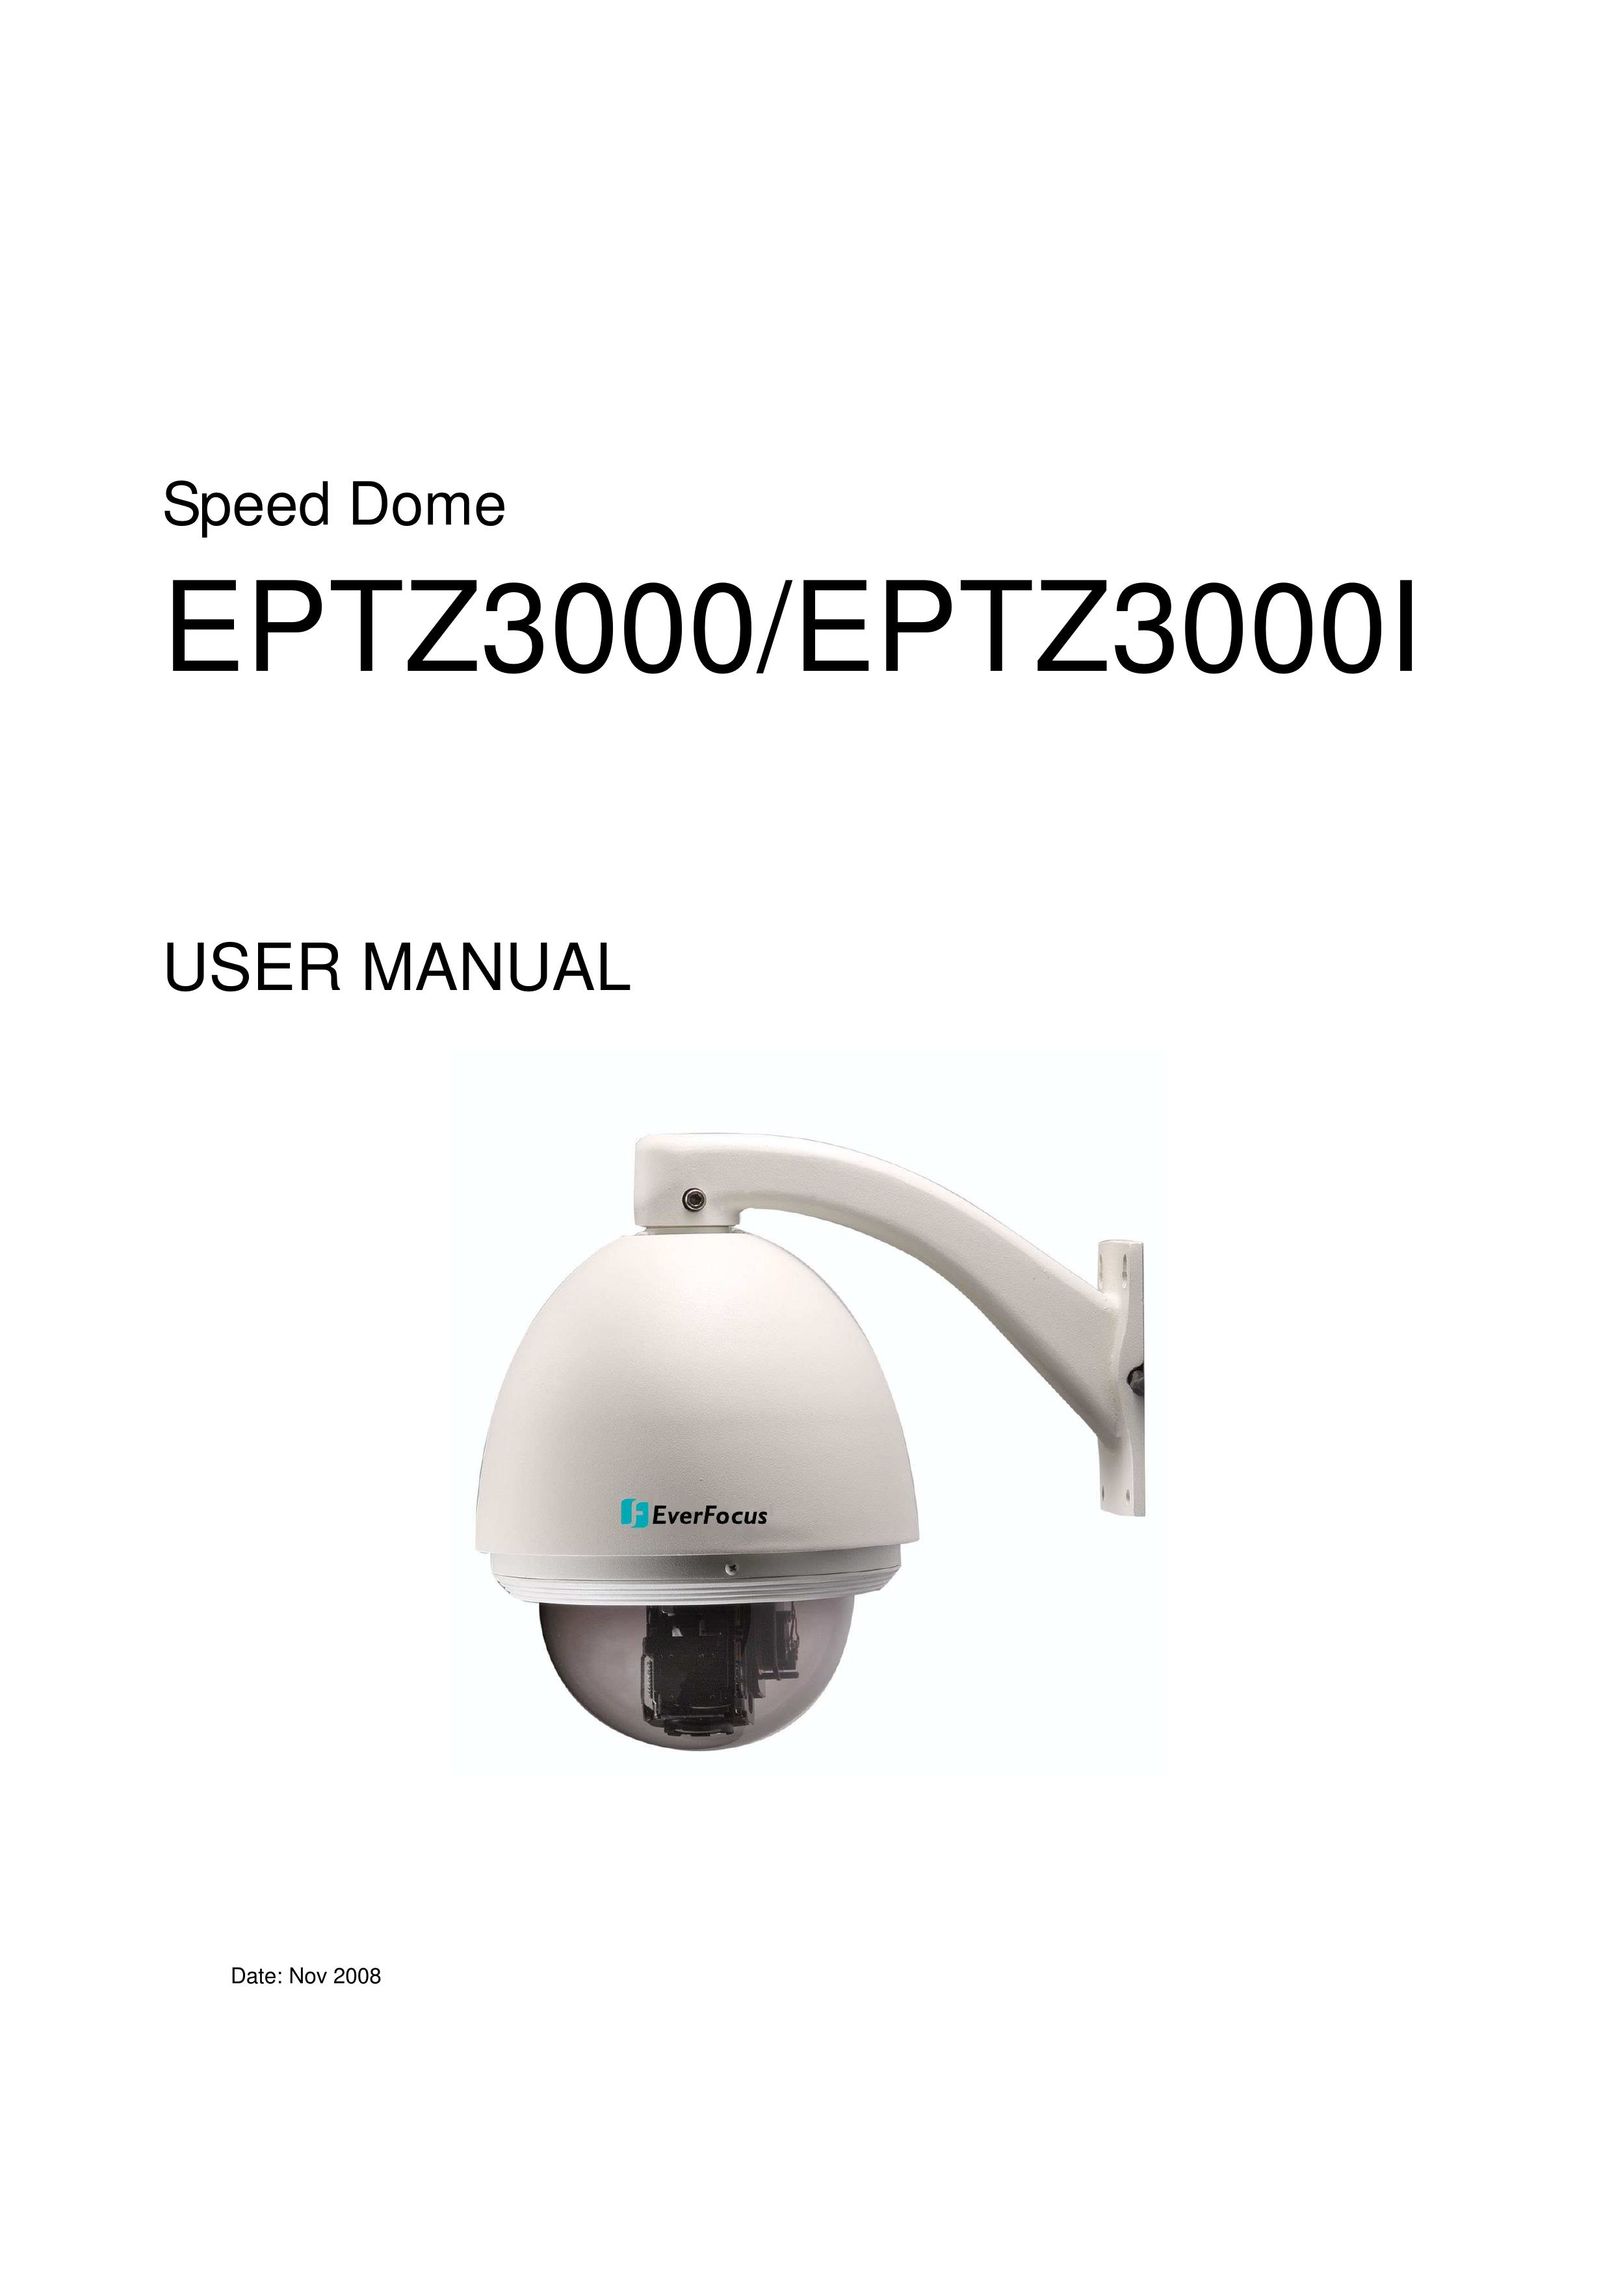 EverFocus EPTZ3000I Home Security System User Manual